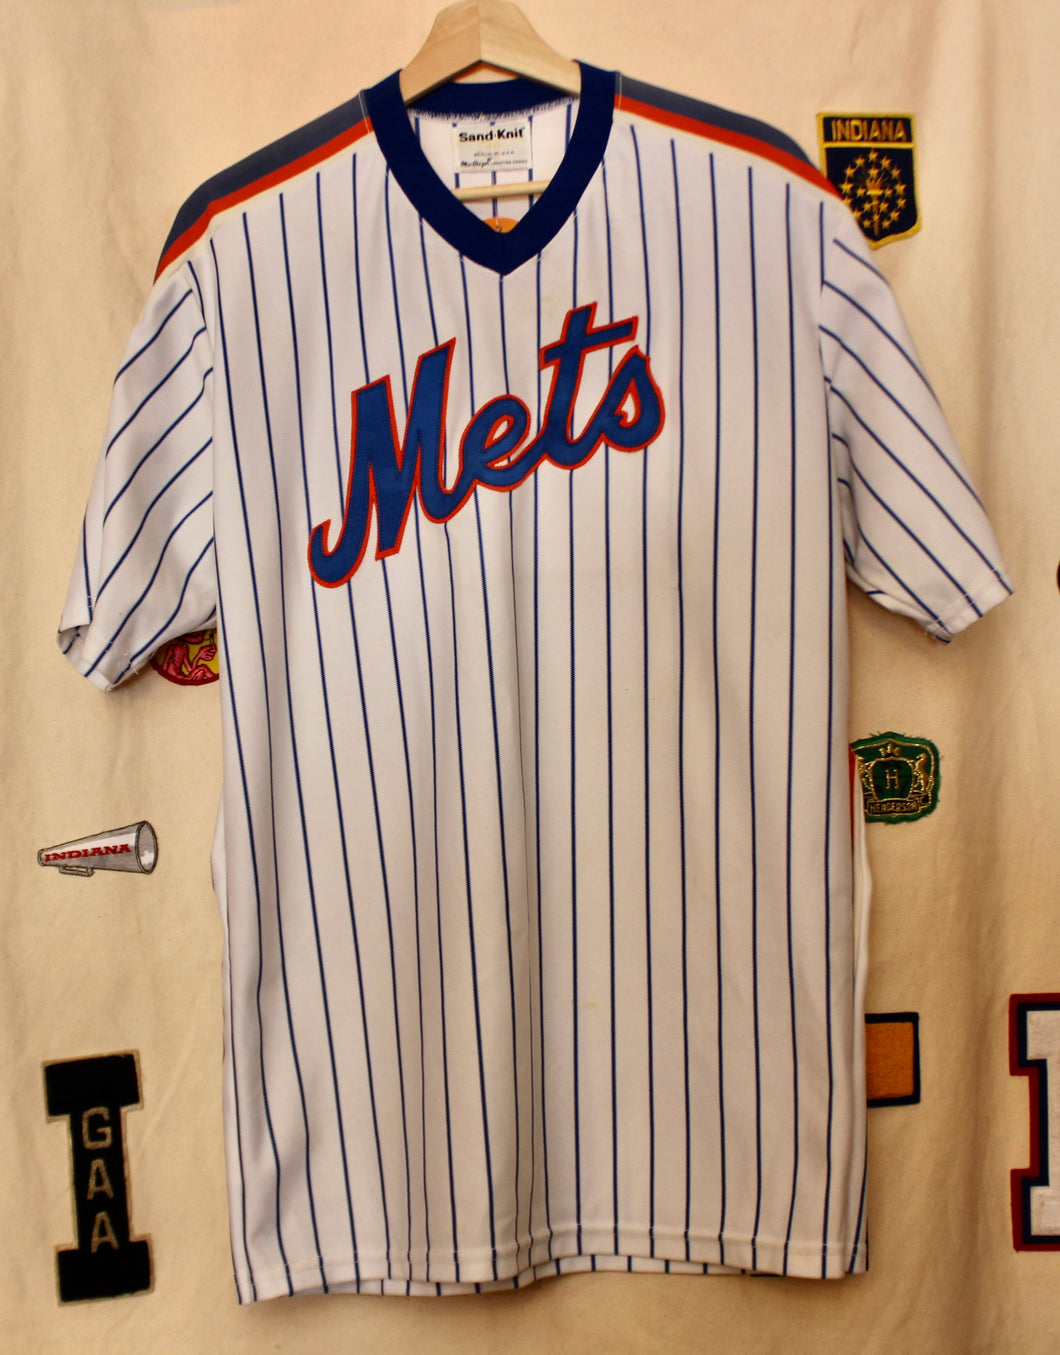 Vintage New York Mets Sandknit Pinstripe Jersey: L/XL